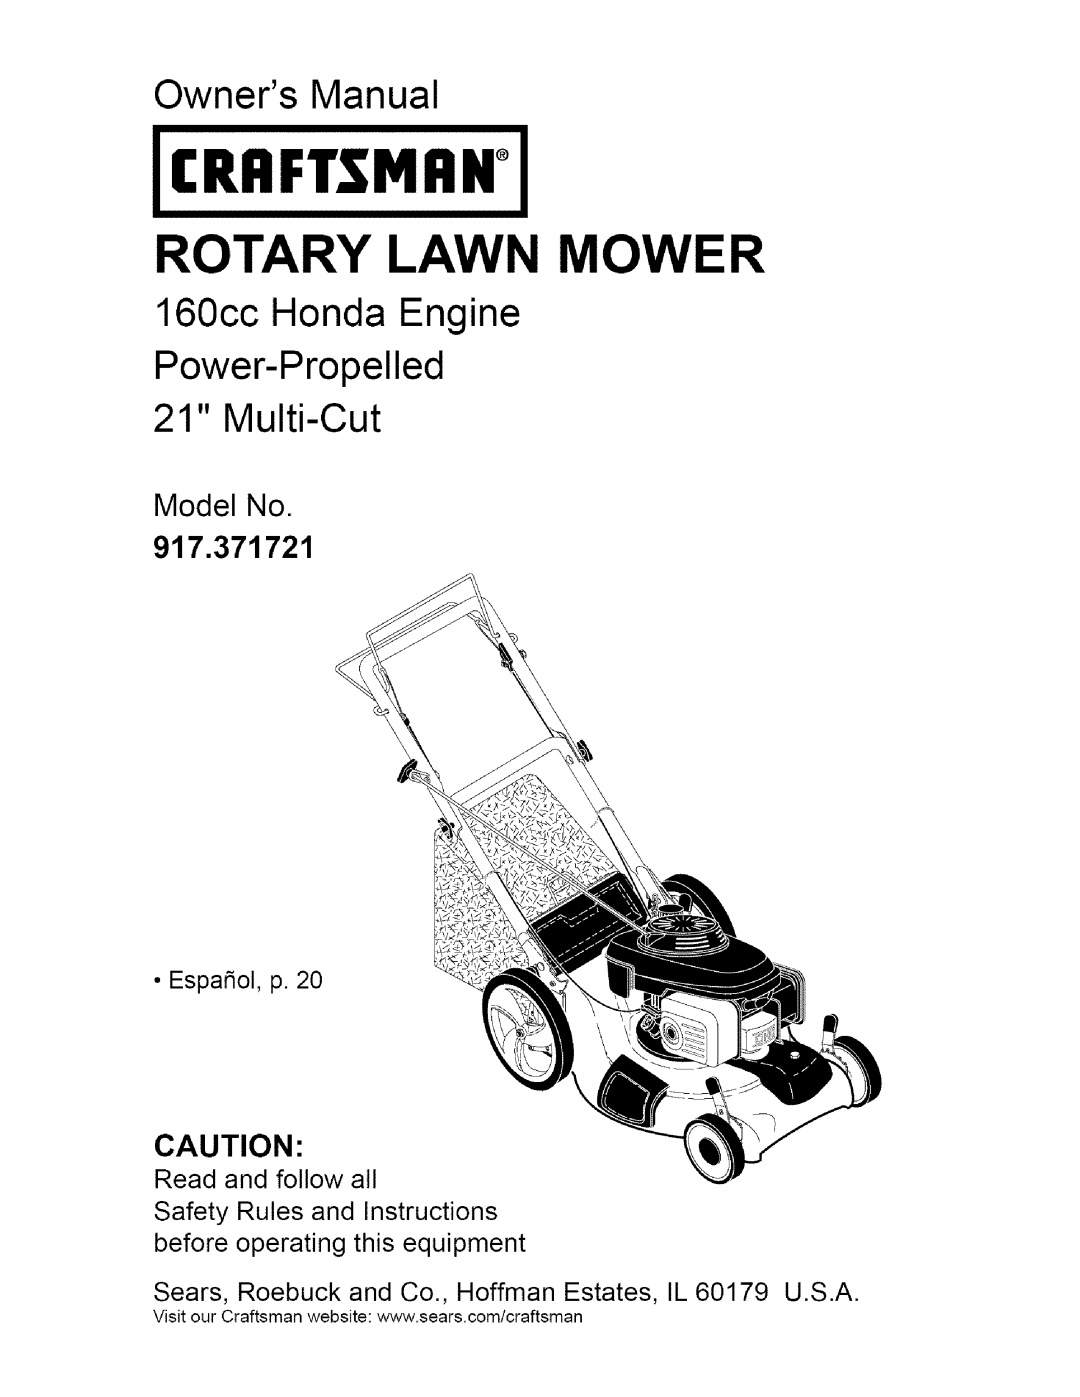 Craftsman 917.371721 owner manual Multi-Cut, Owners Manual, Crrftsmiin, Rotary Lawn Mower, Model No 